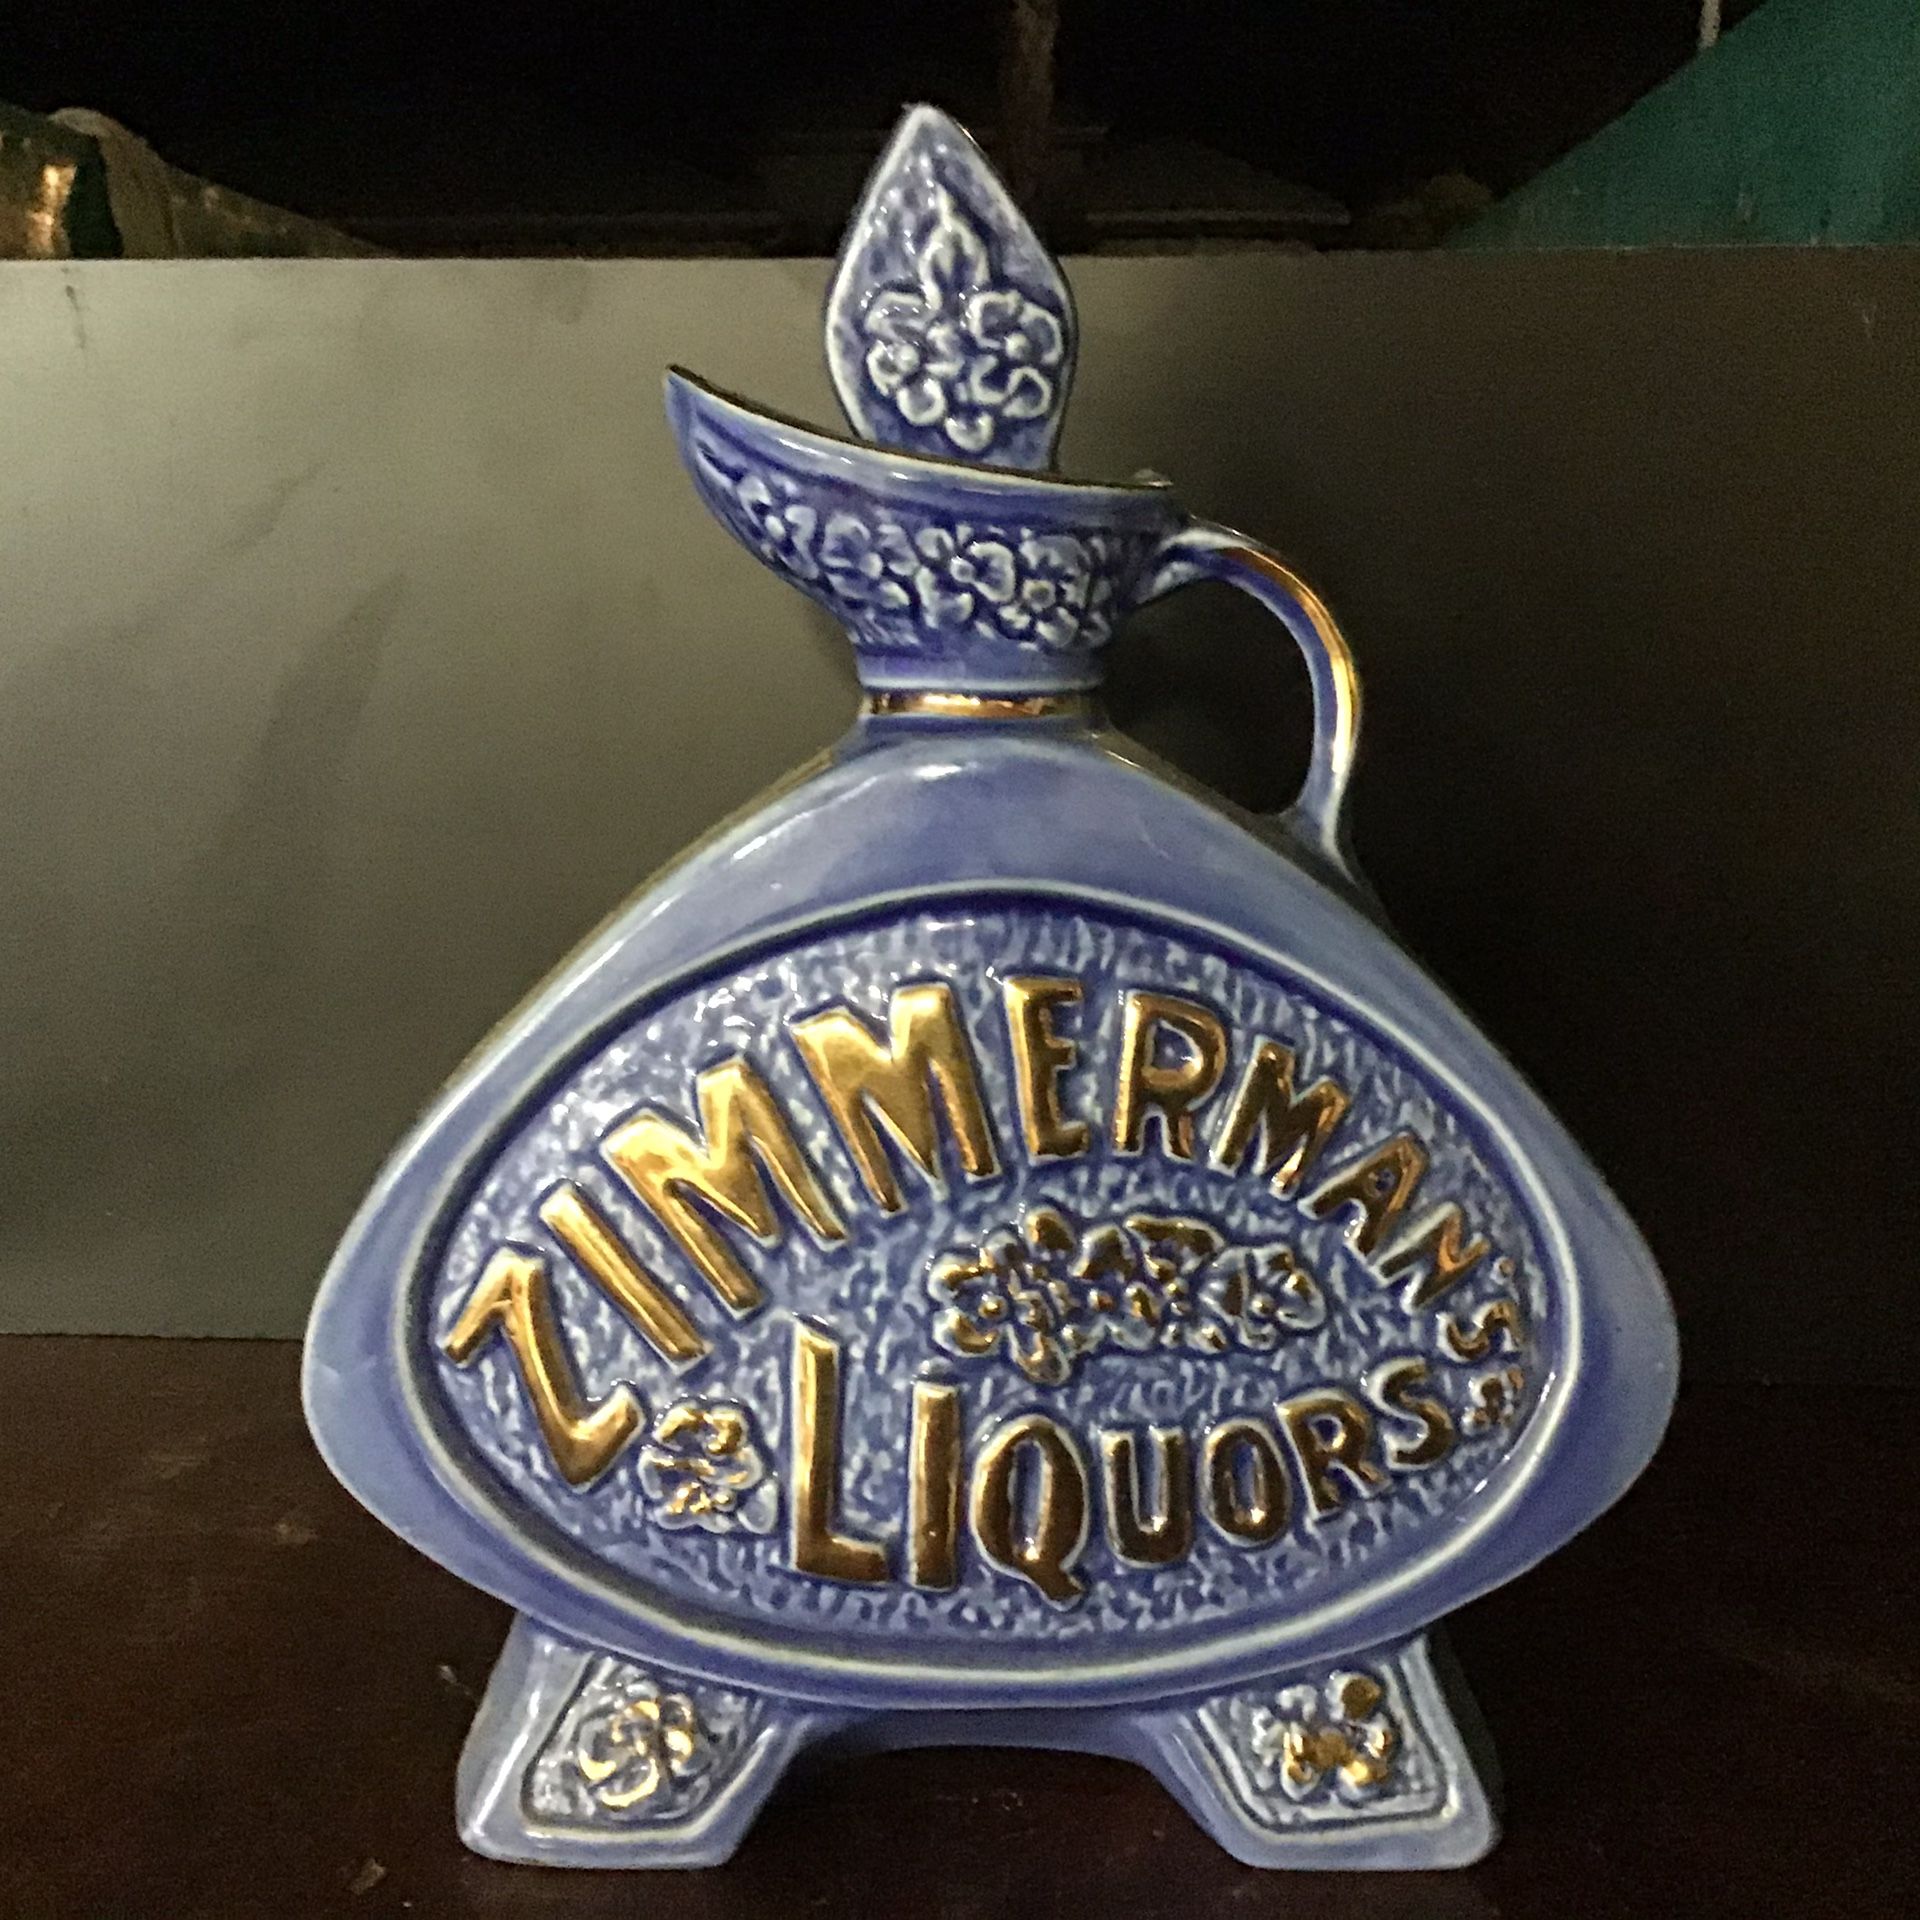 Vintage Jim Beam Whiskey decanter ~ Empty